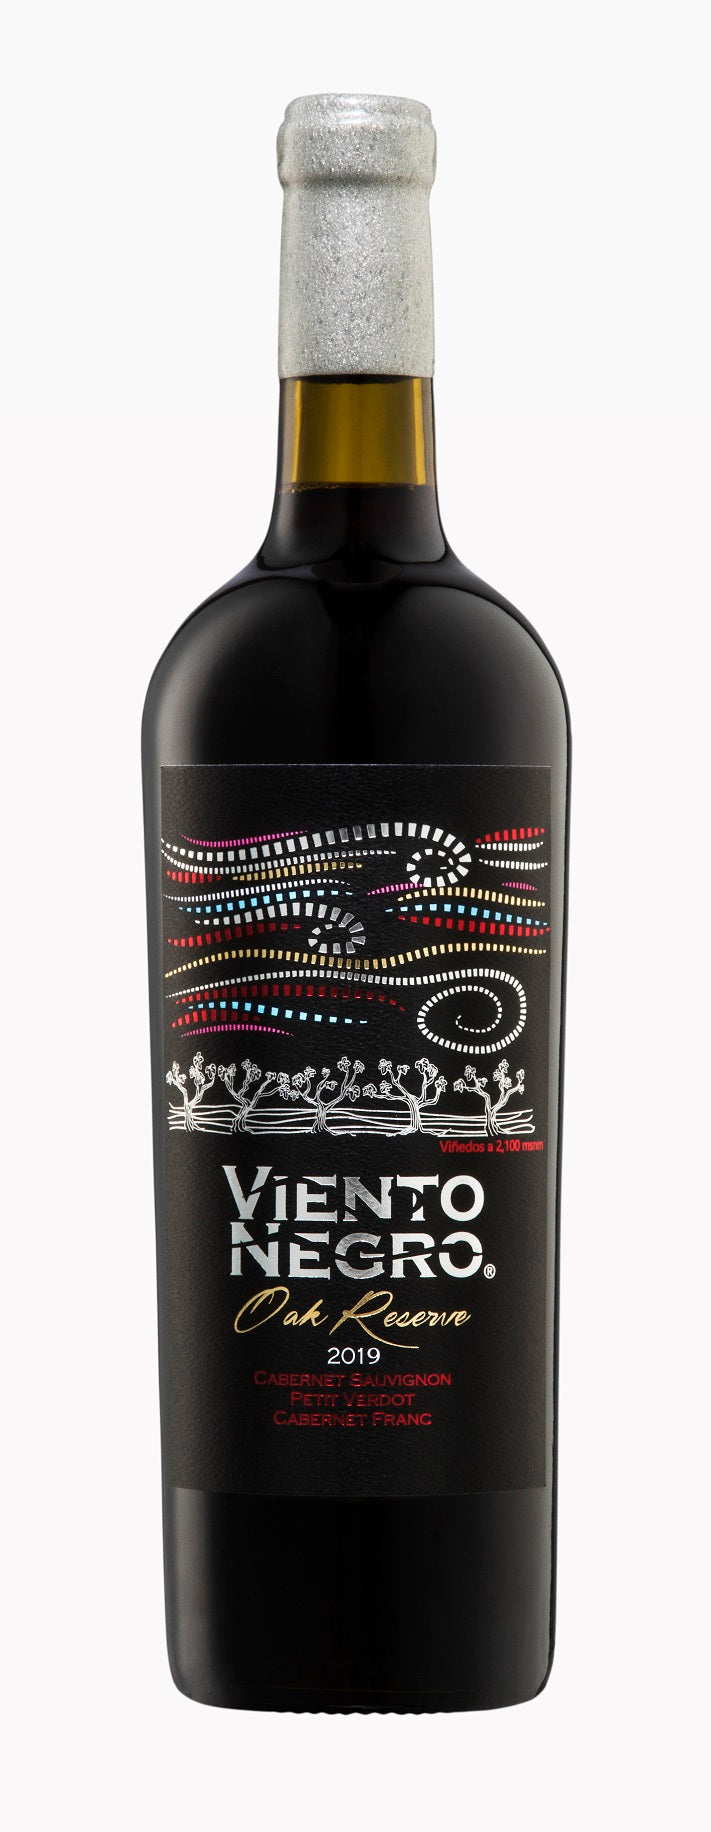 Vino Tinto El Consuelo Viento Negro Oak Reserva Cabernet Sauvignon, Petit Verdot, Cabernet Franc 750 ml